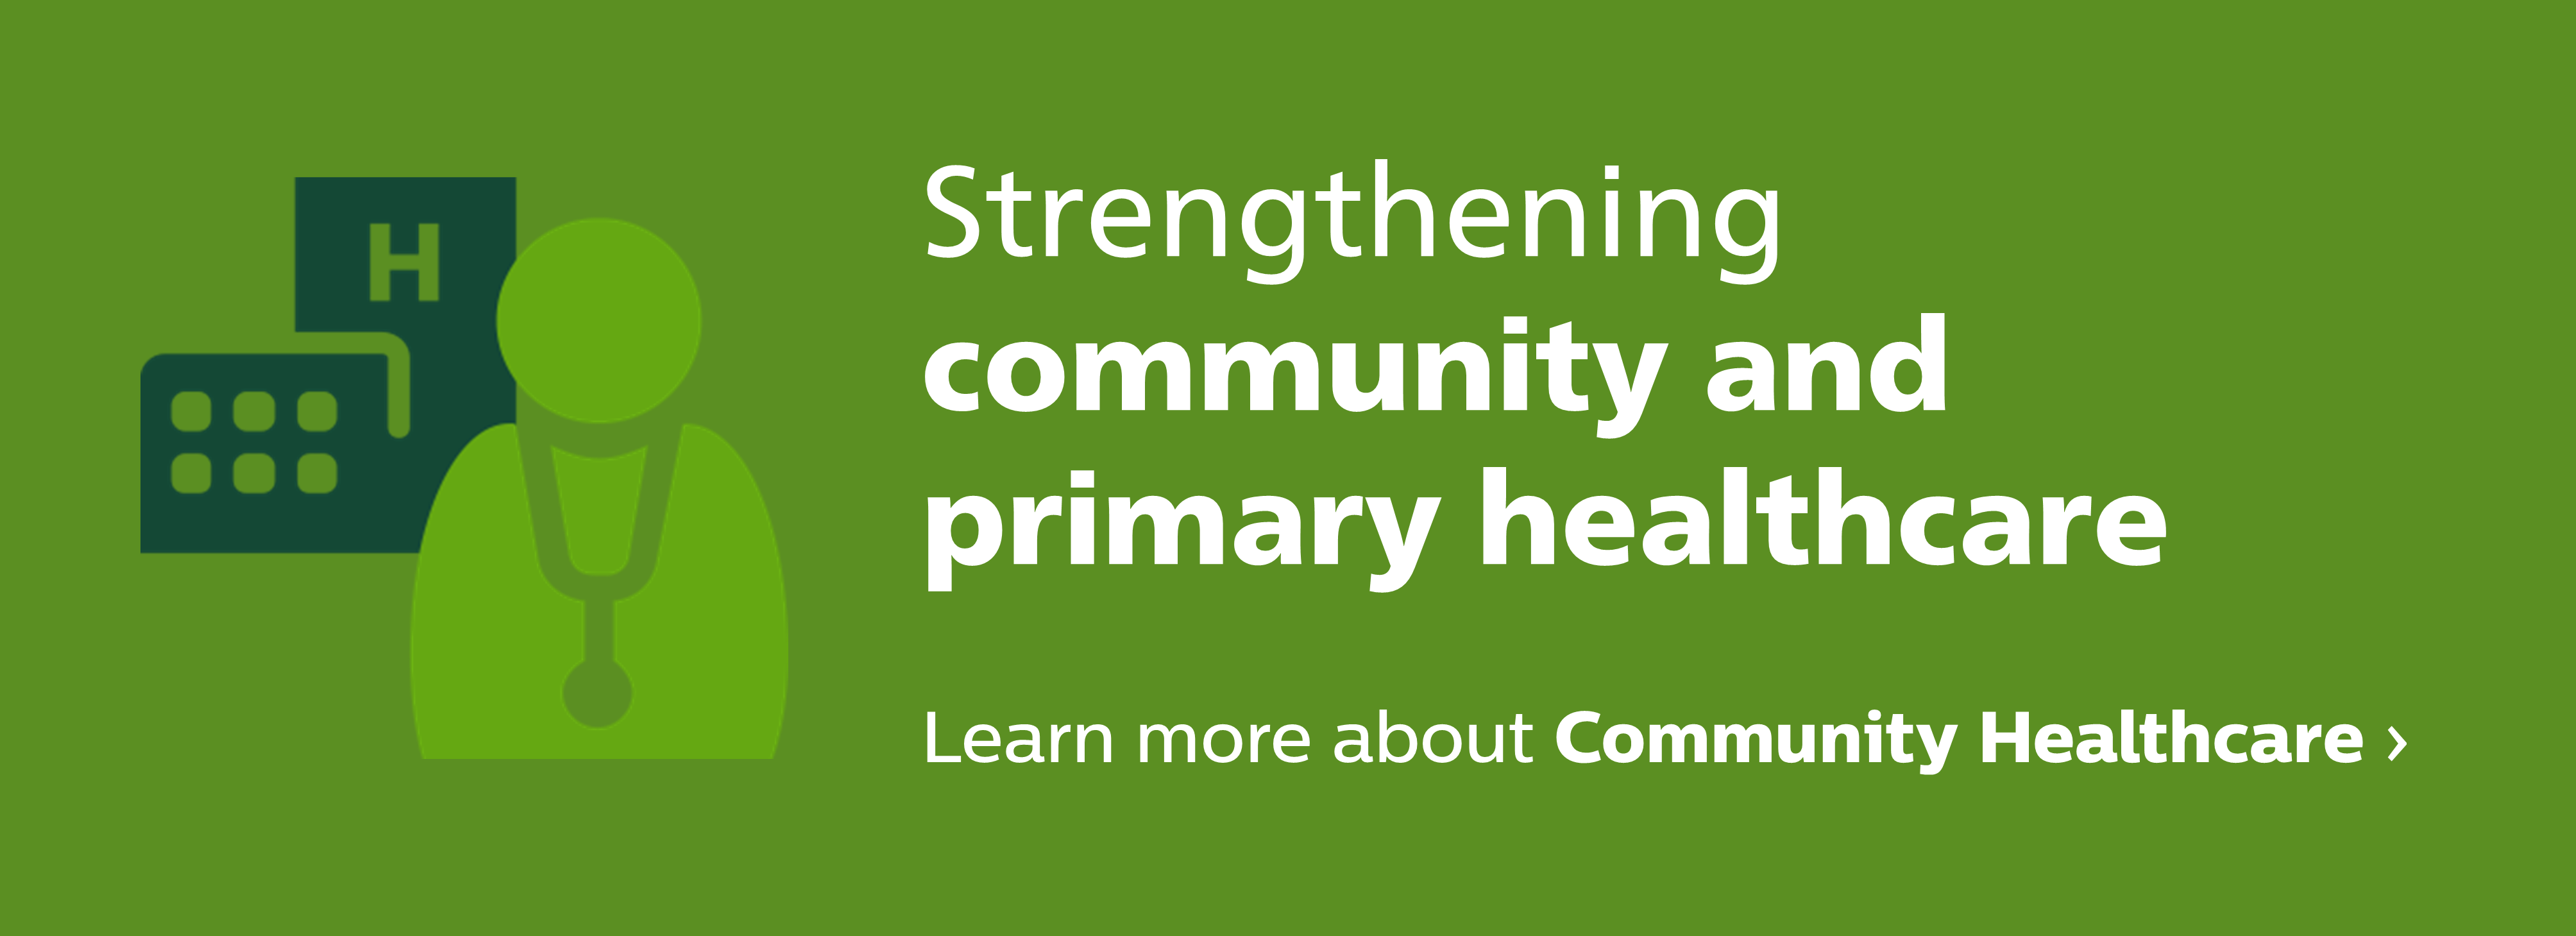 Community healthcare